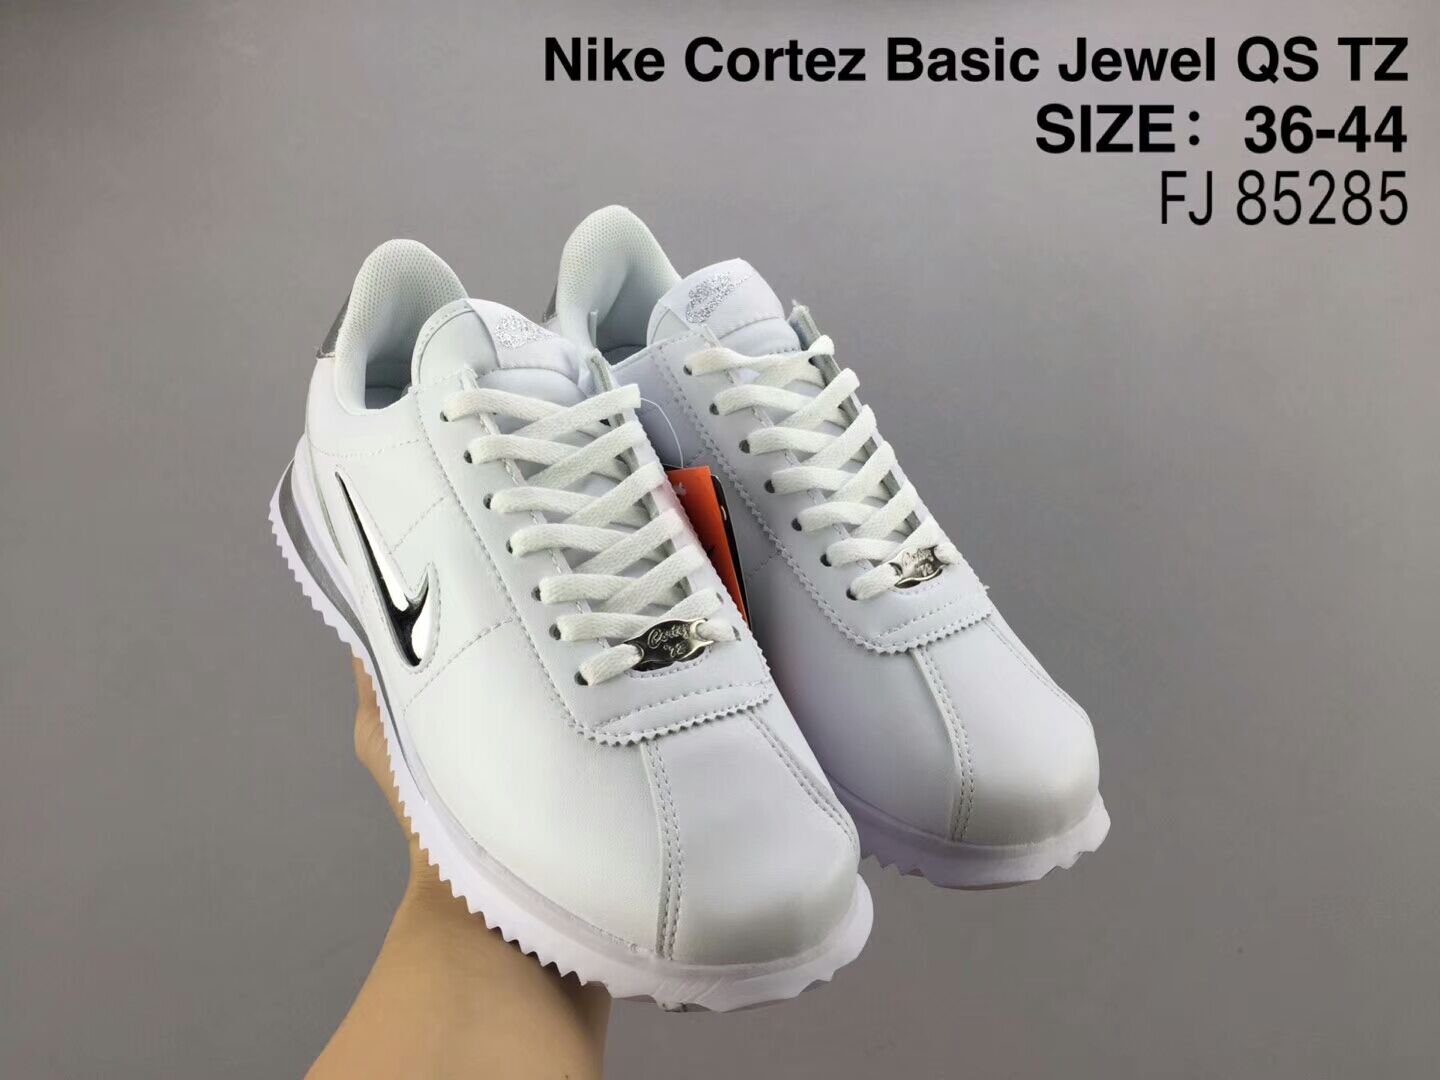 NiKe Cortez Basic Jewel QS TZ White Silver Shoes